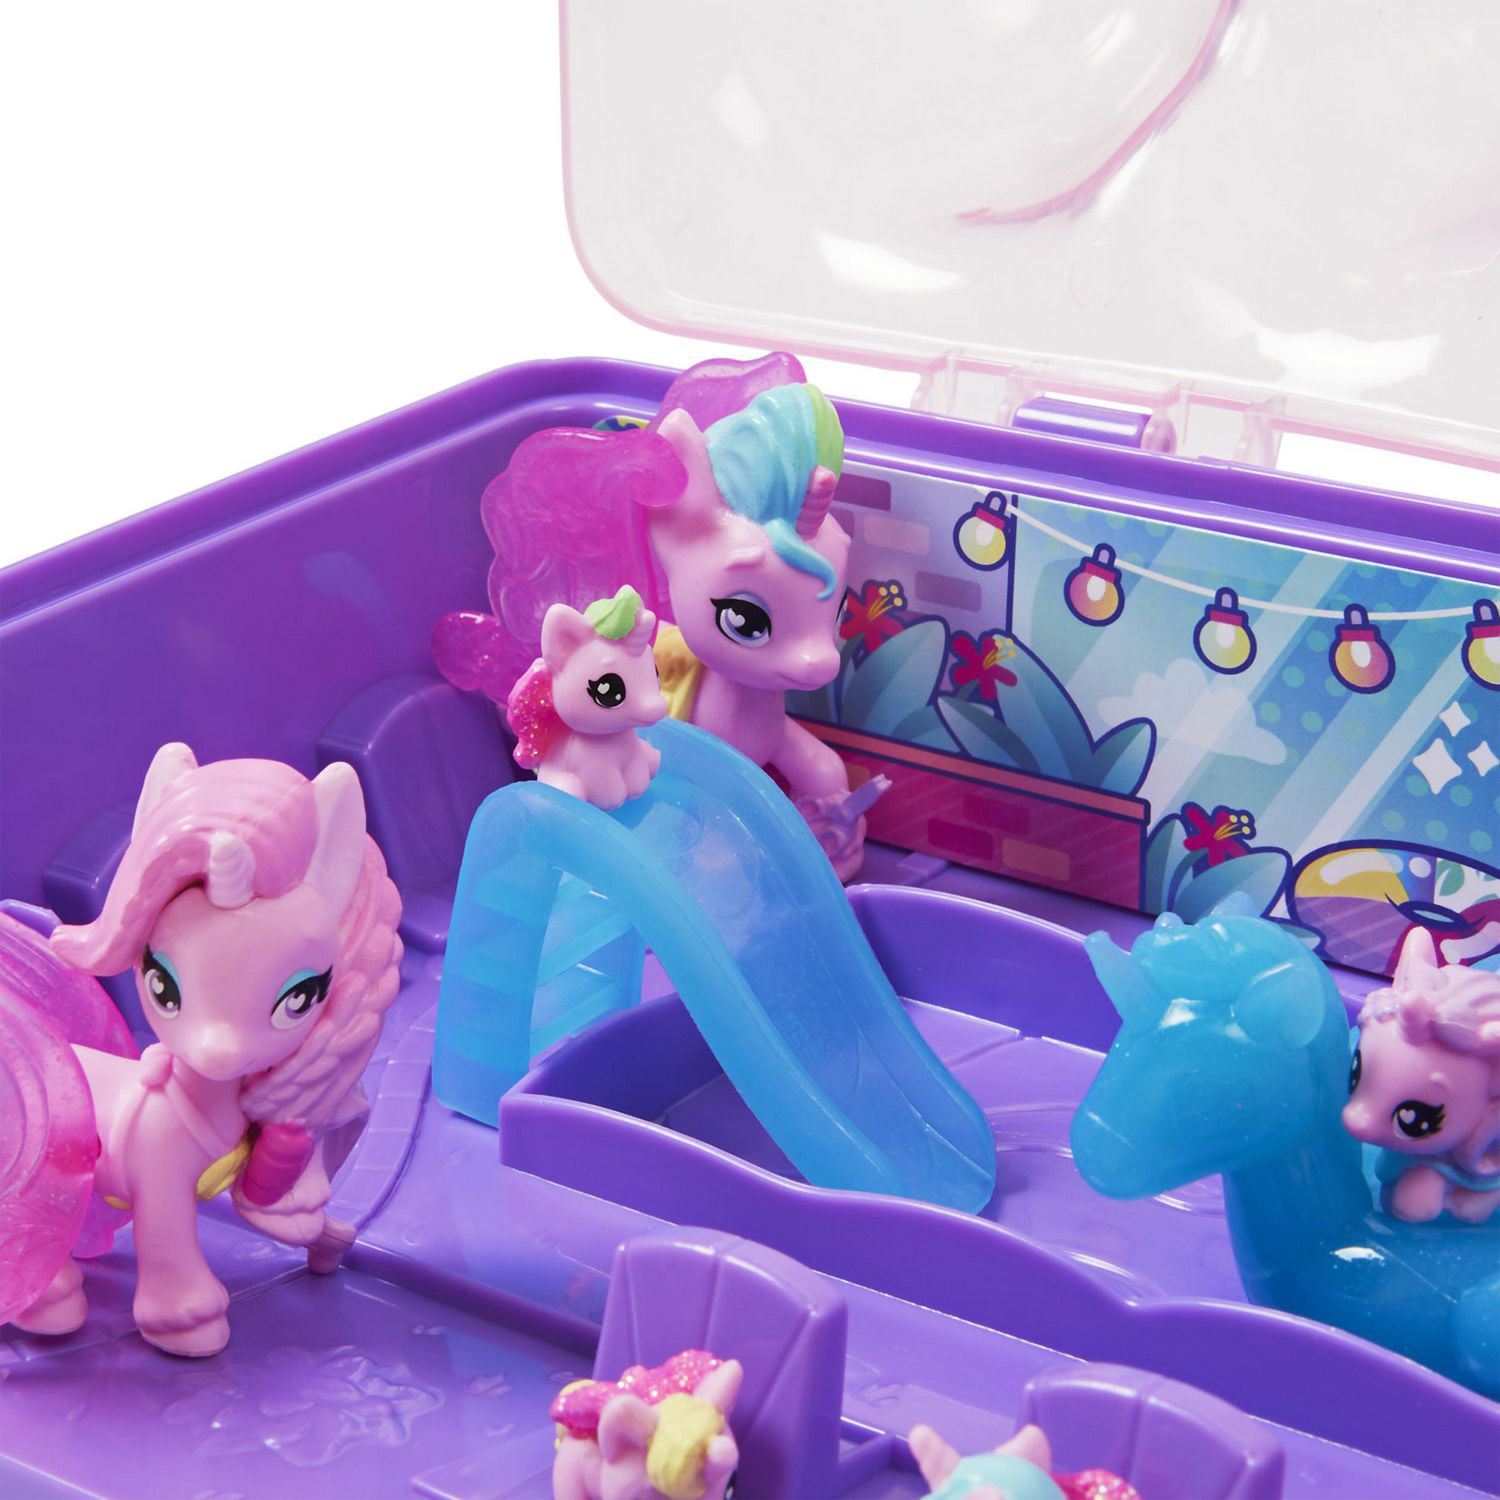 Unicorn Girls - new dolls and animated series form Headstart toys 